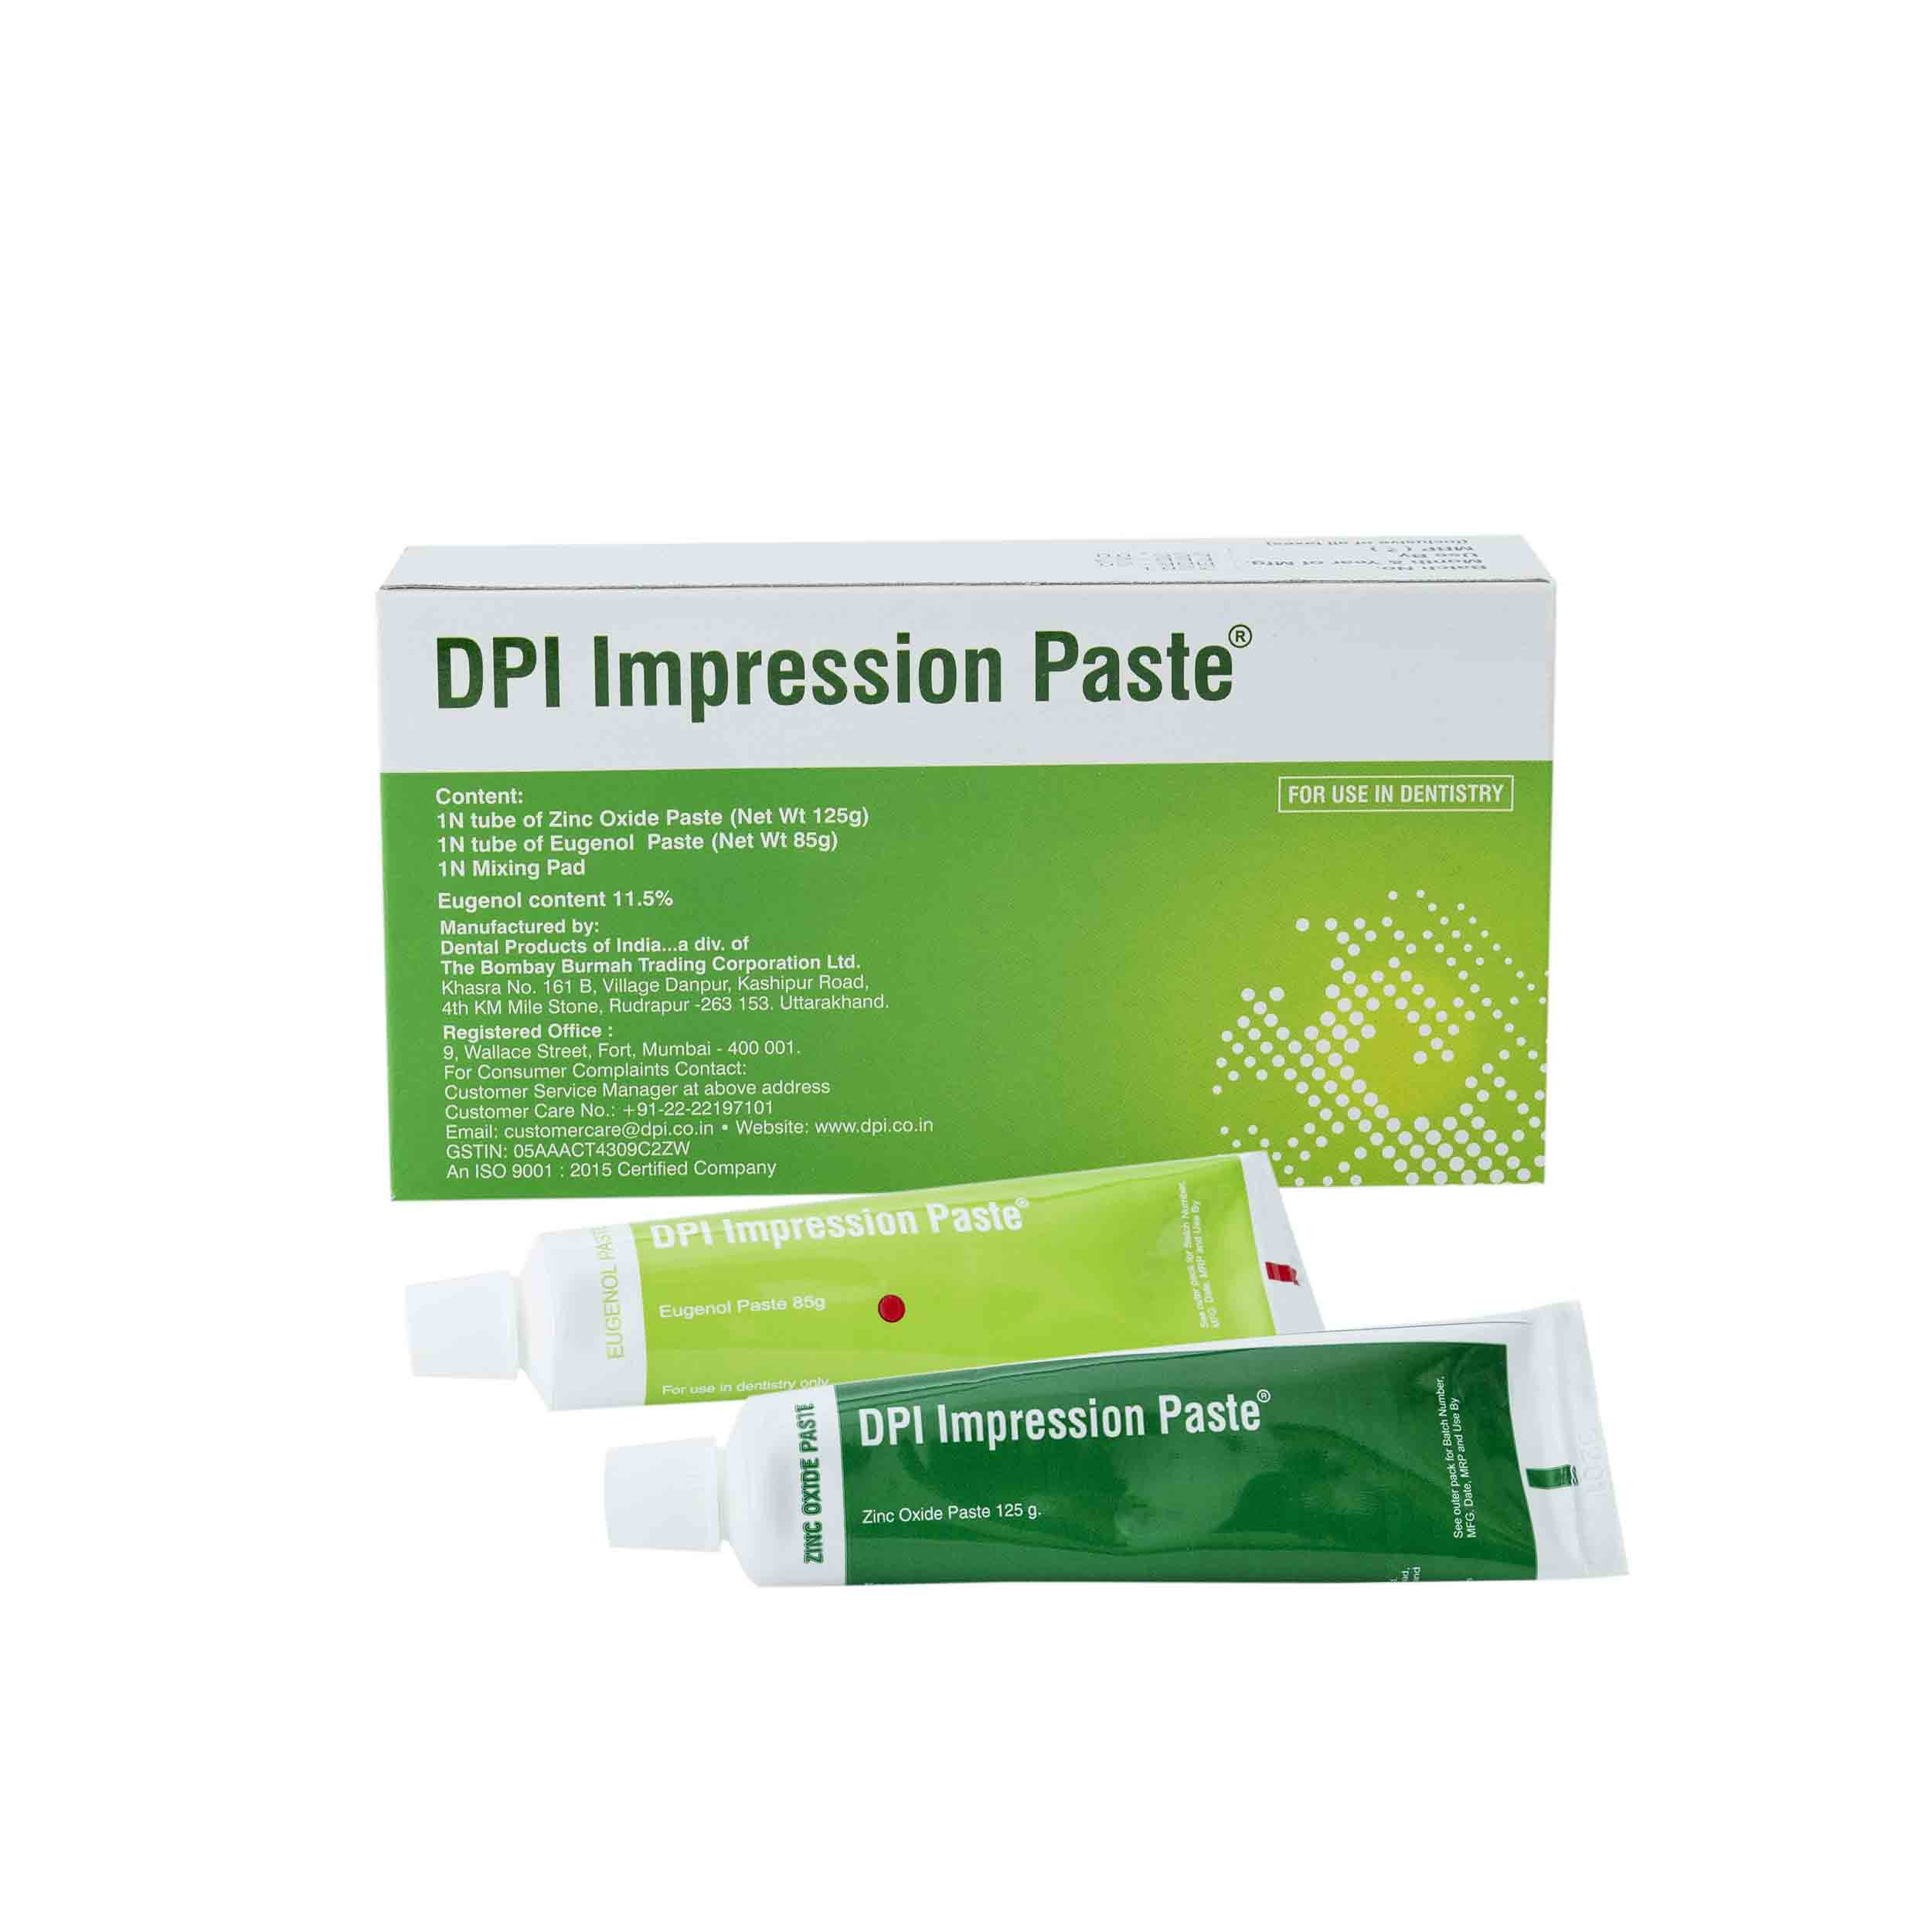 DPI Impression paste